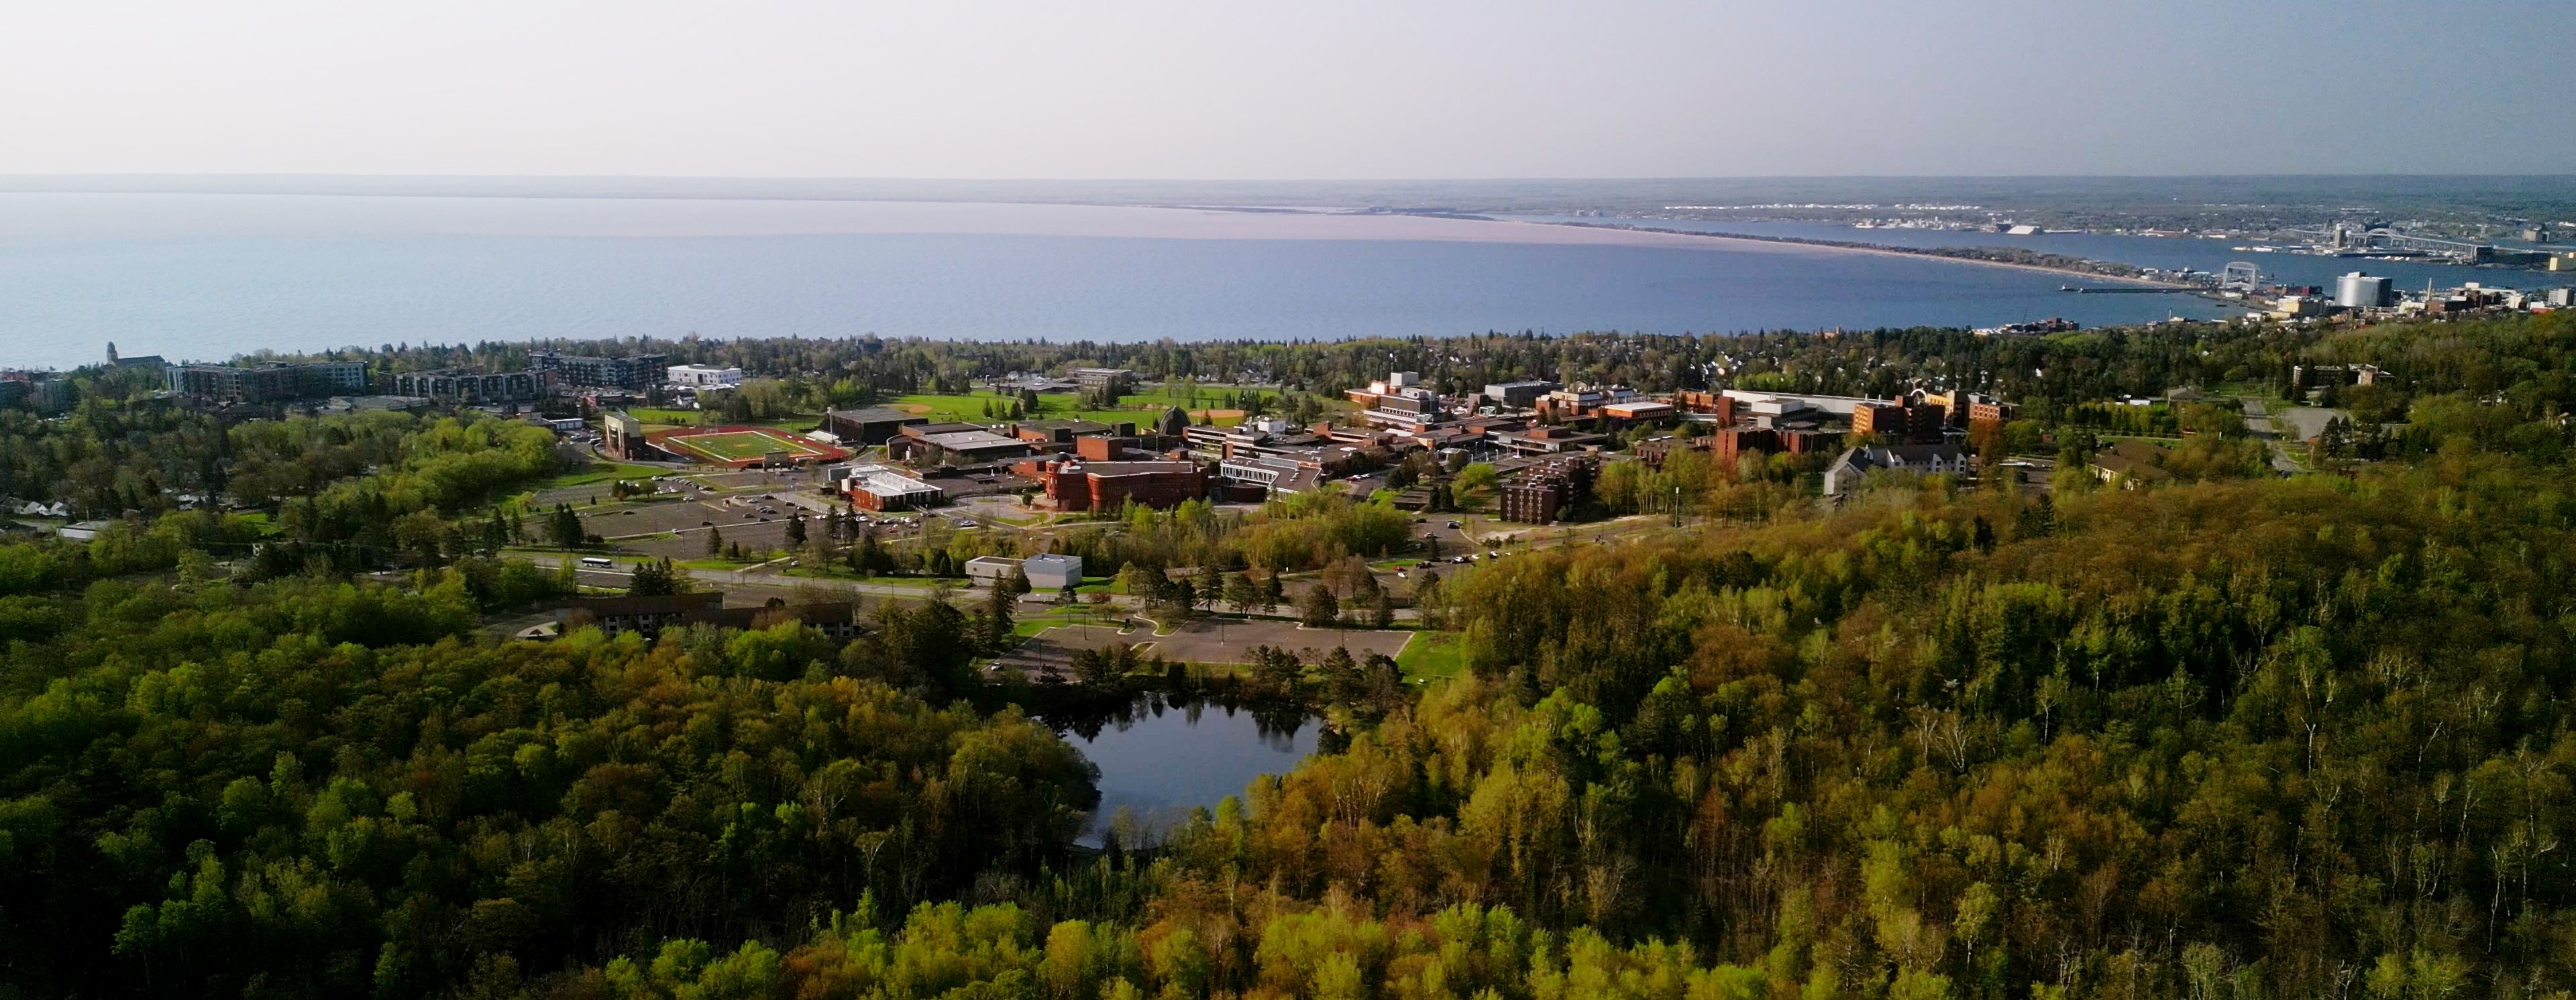 A summer aerial view of campus, facing Lake Superior